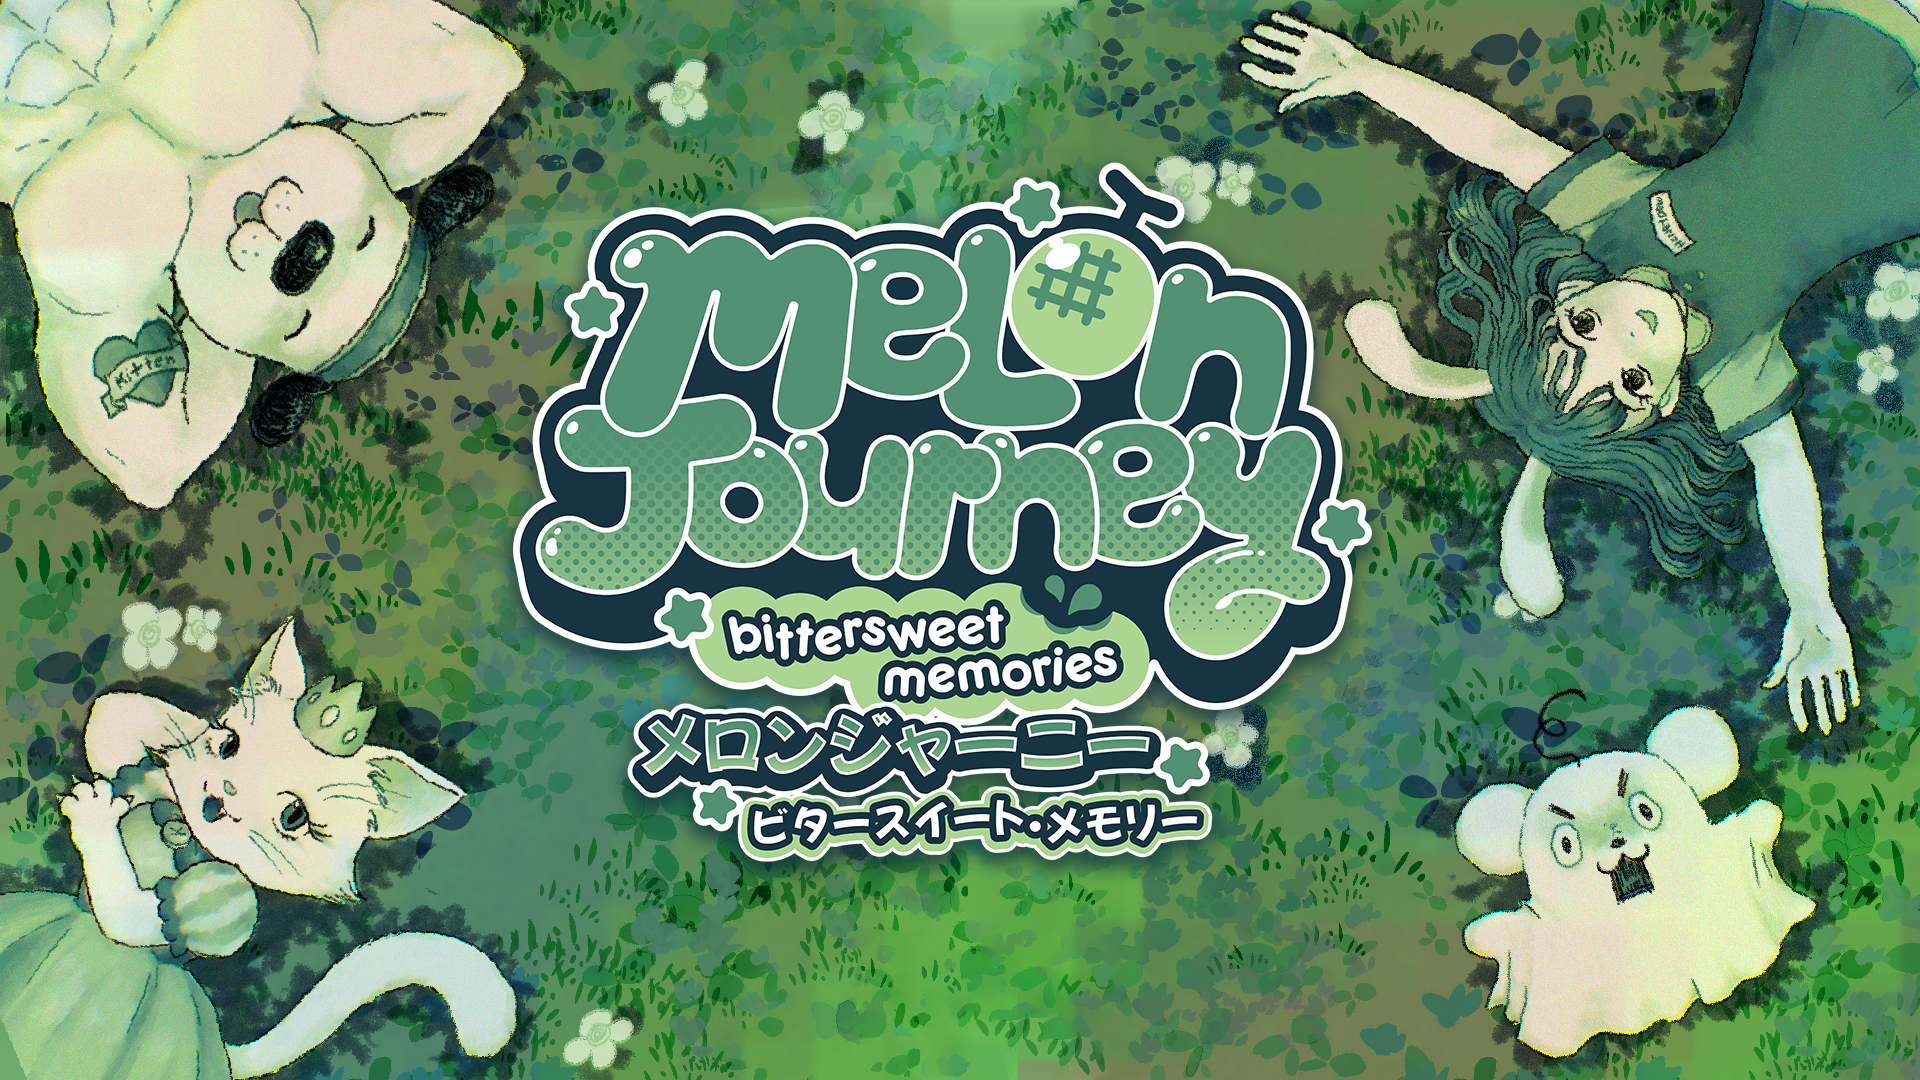 Melon Journey メロンジャーニー：ビタスイート・メモリー - Beep